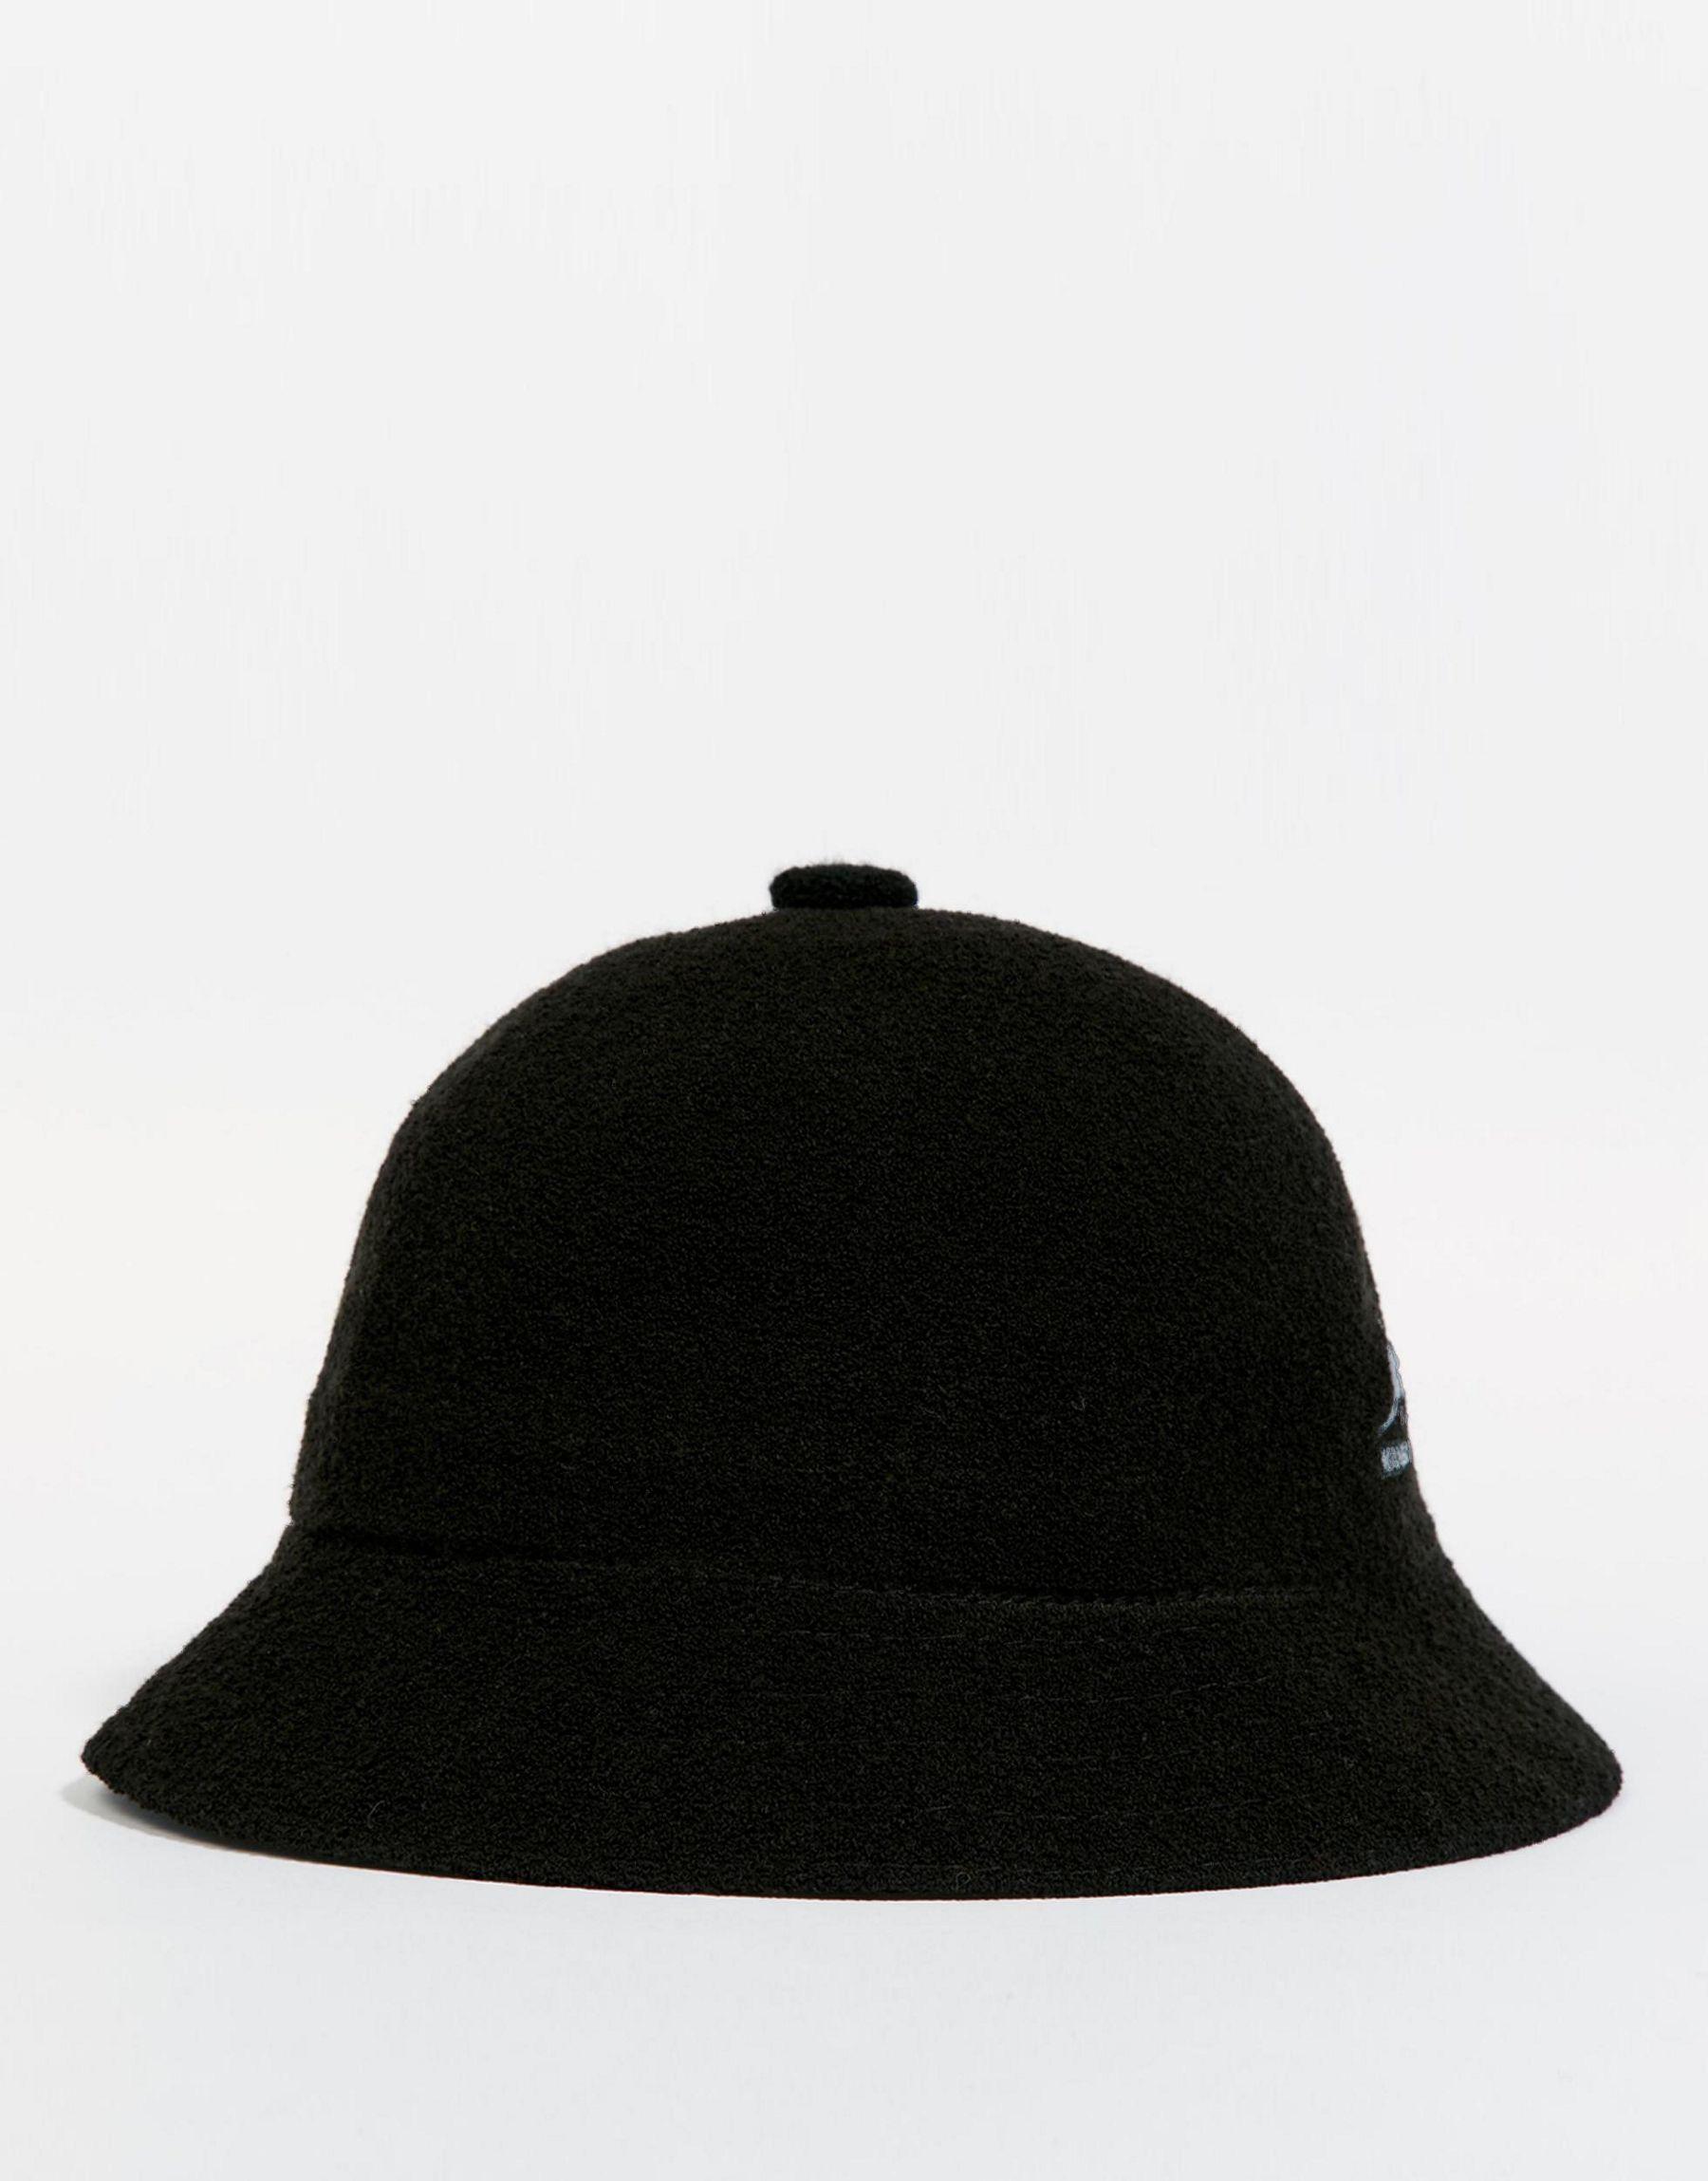 Kangol Bermuda Casual Hat in Black for Men - Lyst